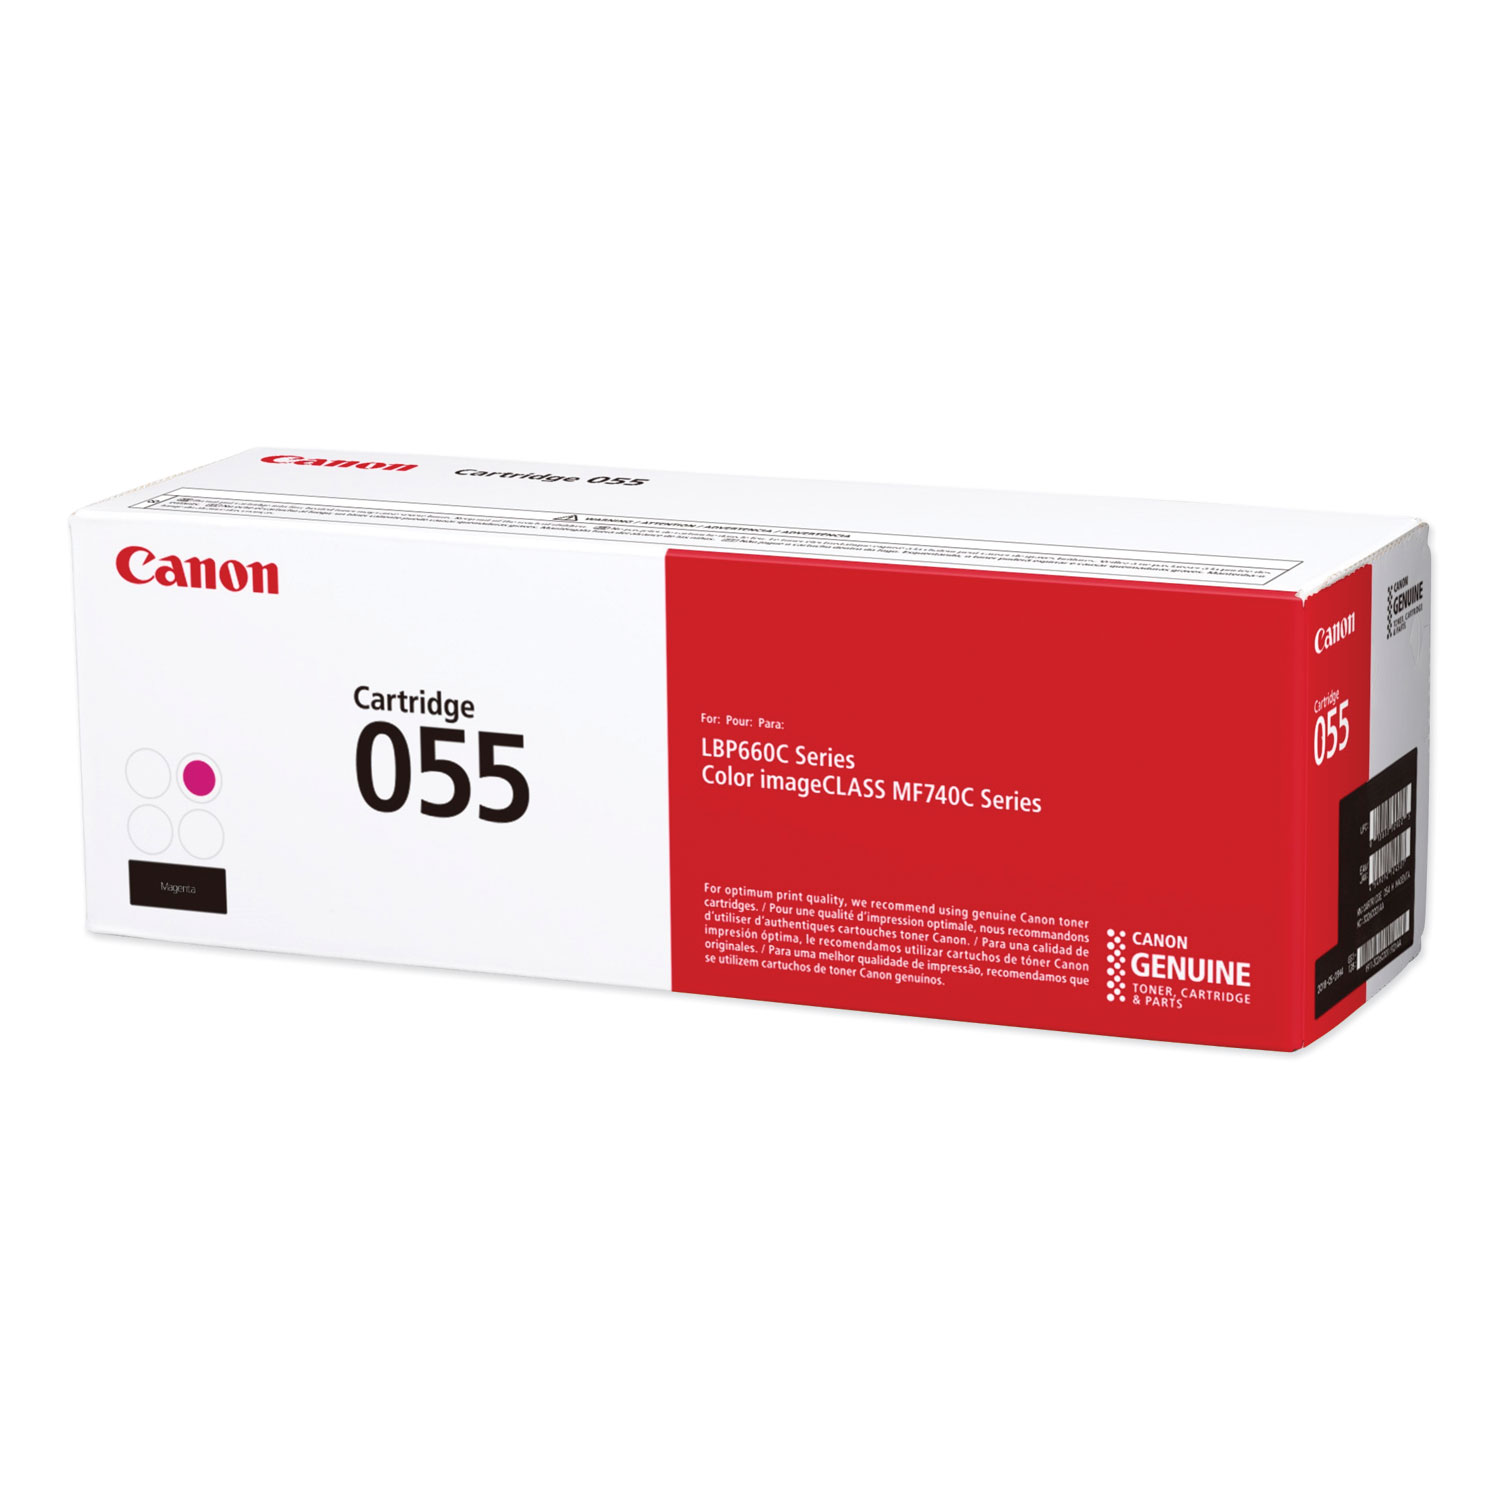  Canon 3014C001 3014C001 (055) Toner, 2,100 Page-Yield, Magenta (CNM3014C001) 